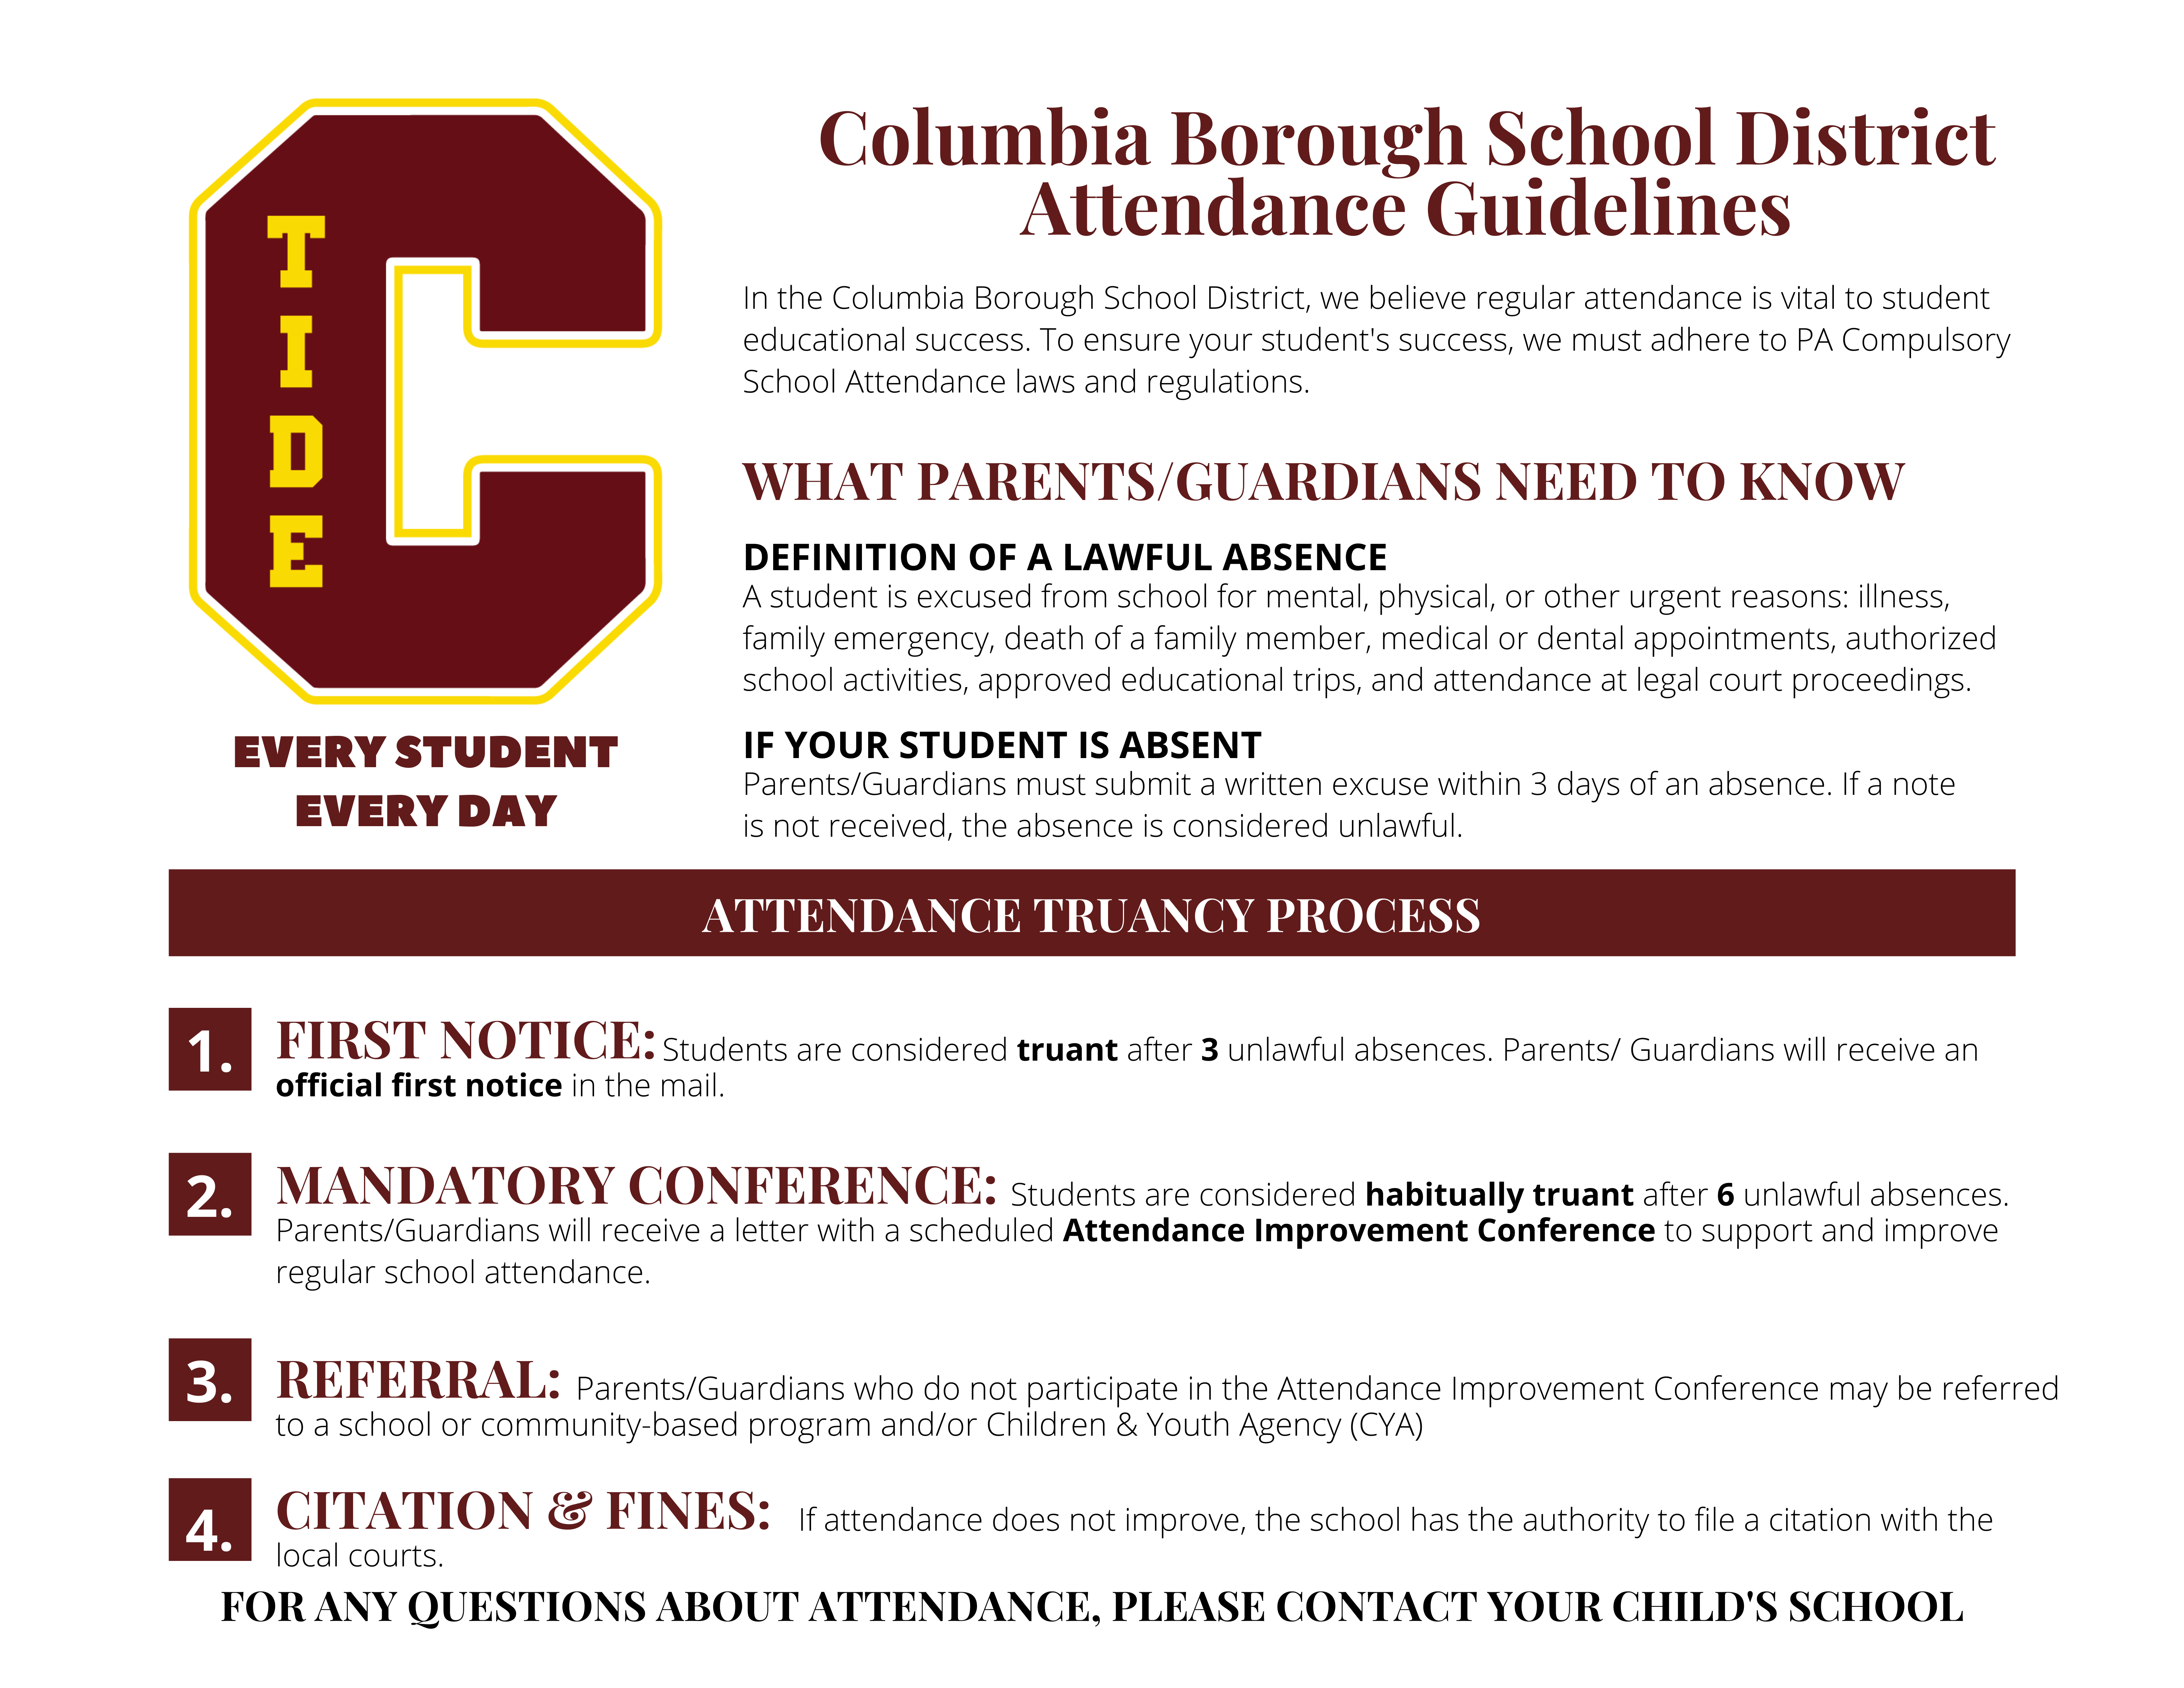 Columbia Borough School District Attendance Guidelines click for pdf